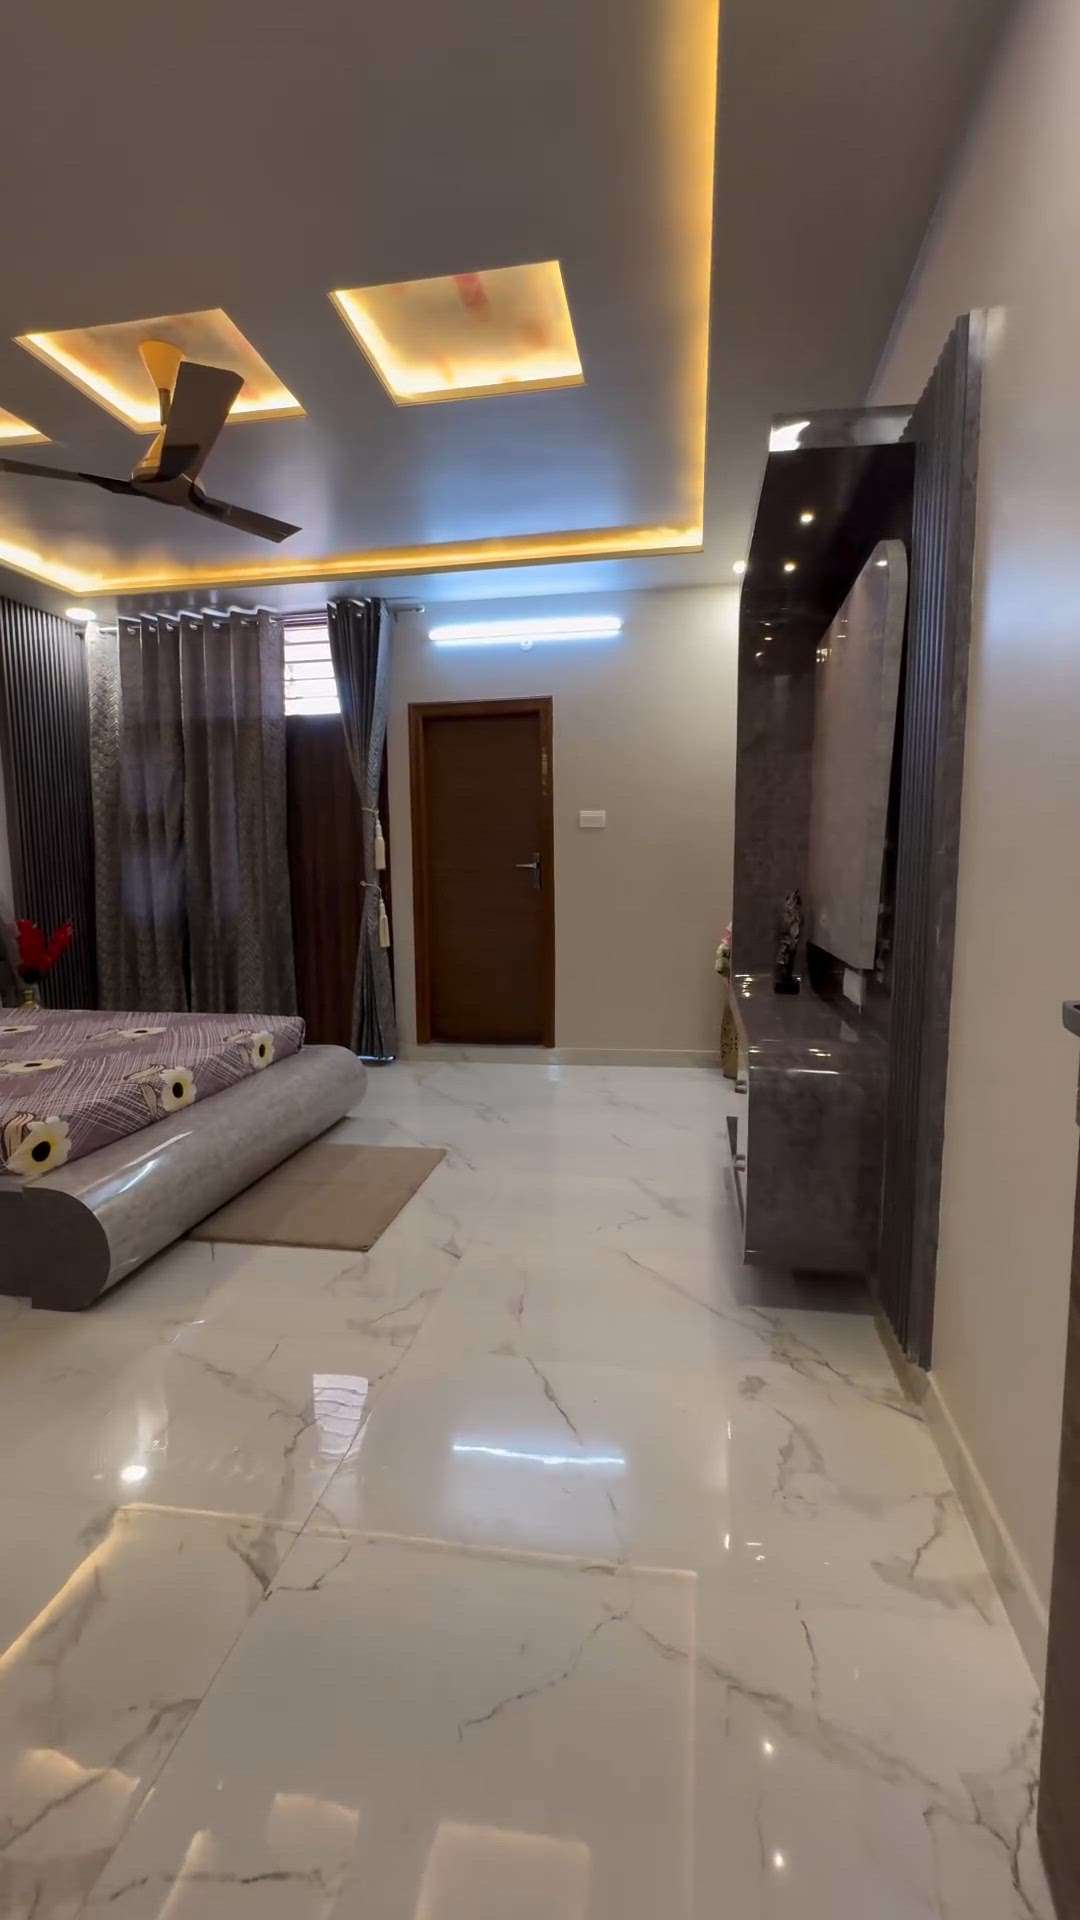 Bedroom Interior 💕❤️
8077017254
 #MasterBedroom  #BedroomDecor  #KingsizeBedroom  #BedroomDesigns   #WoodenBeds  #ModernBedMaking  #bedroomplan  #bedroomdeaignideas  #bedroomplan  #bedroomlights  #BedroomIdeas  #masterbedroomdecor  #bedroomdoors  #InteriorDesigner  #KitchenInterior  #Architectural&Interior  #LUXURY_INTERIOR   #meerut  #delhi  #hapur  #gaziabad  #muradnagar  #bulandshahar  #saharanpur  #muzaffarnagar  #haridwar  #khatuali  #agra  #mathura  #lucknowcity  #Lucknow  #Kannur  #noidainterior  #greaternoida  #faridabad  #gurugram  #jaipur  #LUXURY_INTERIOR